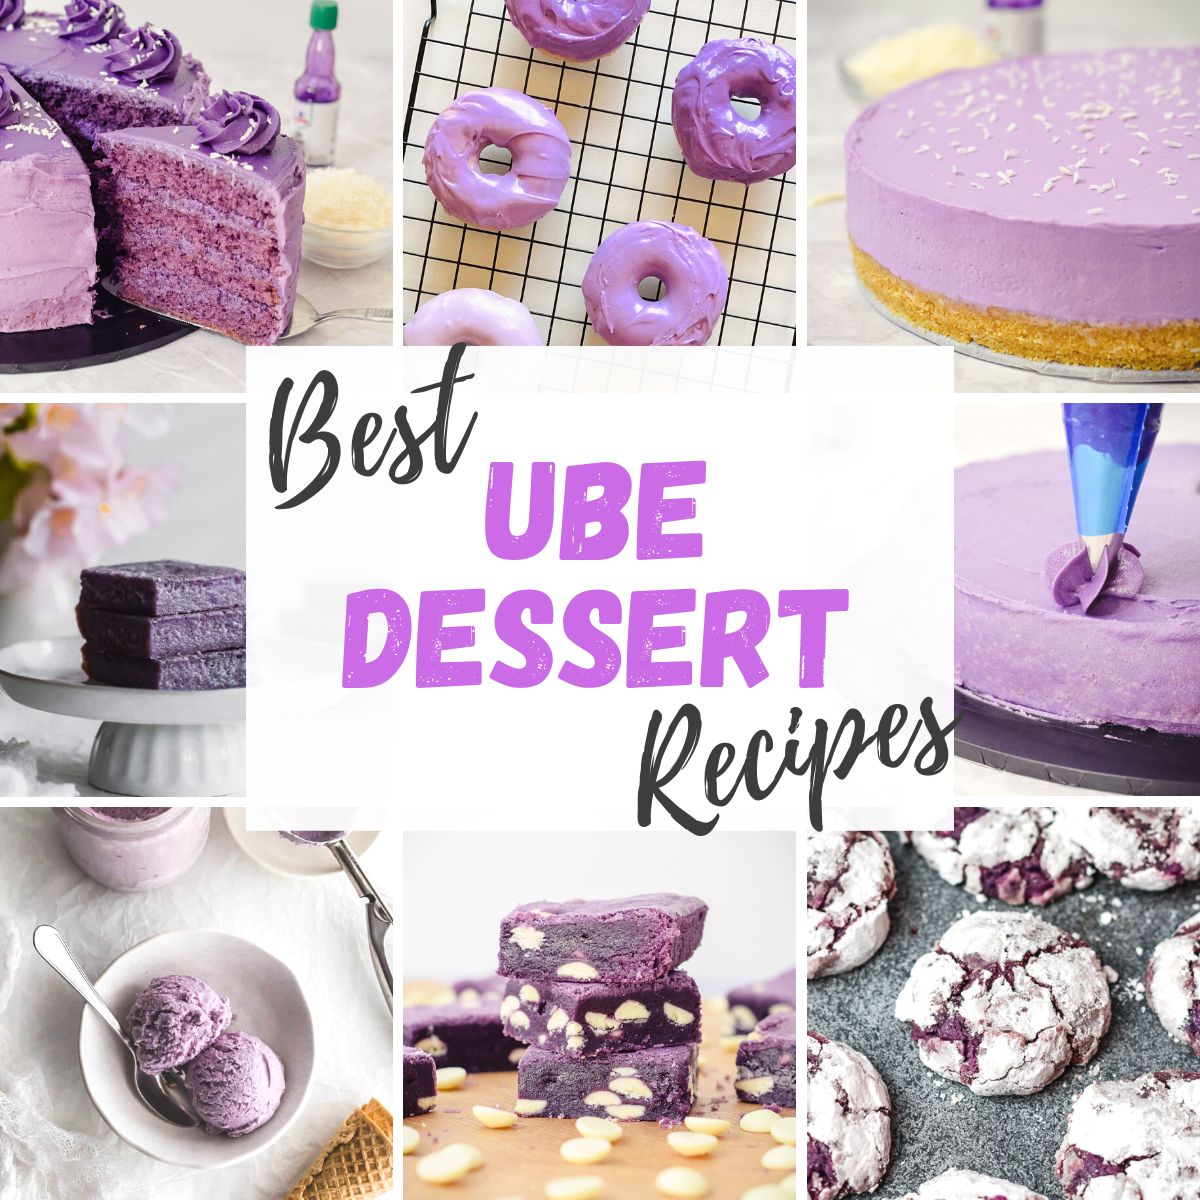 ube dessert recipes with ube cake, ube donuts, cheesecake and brownies.